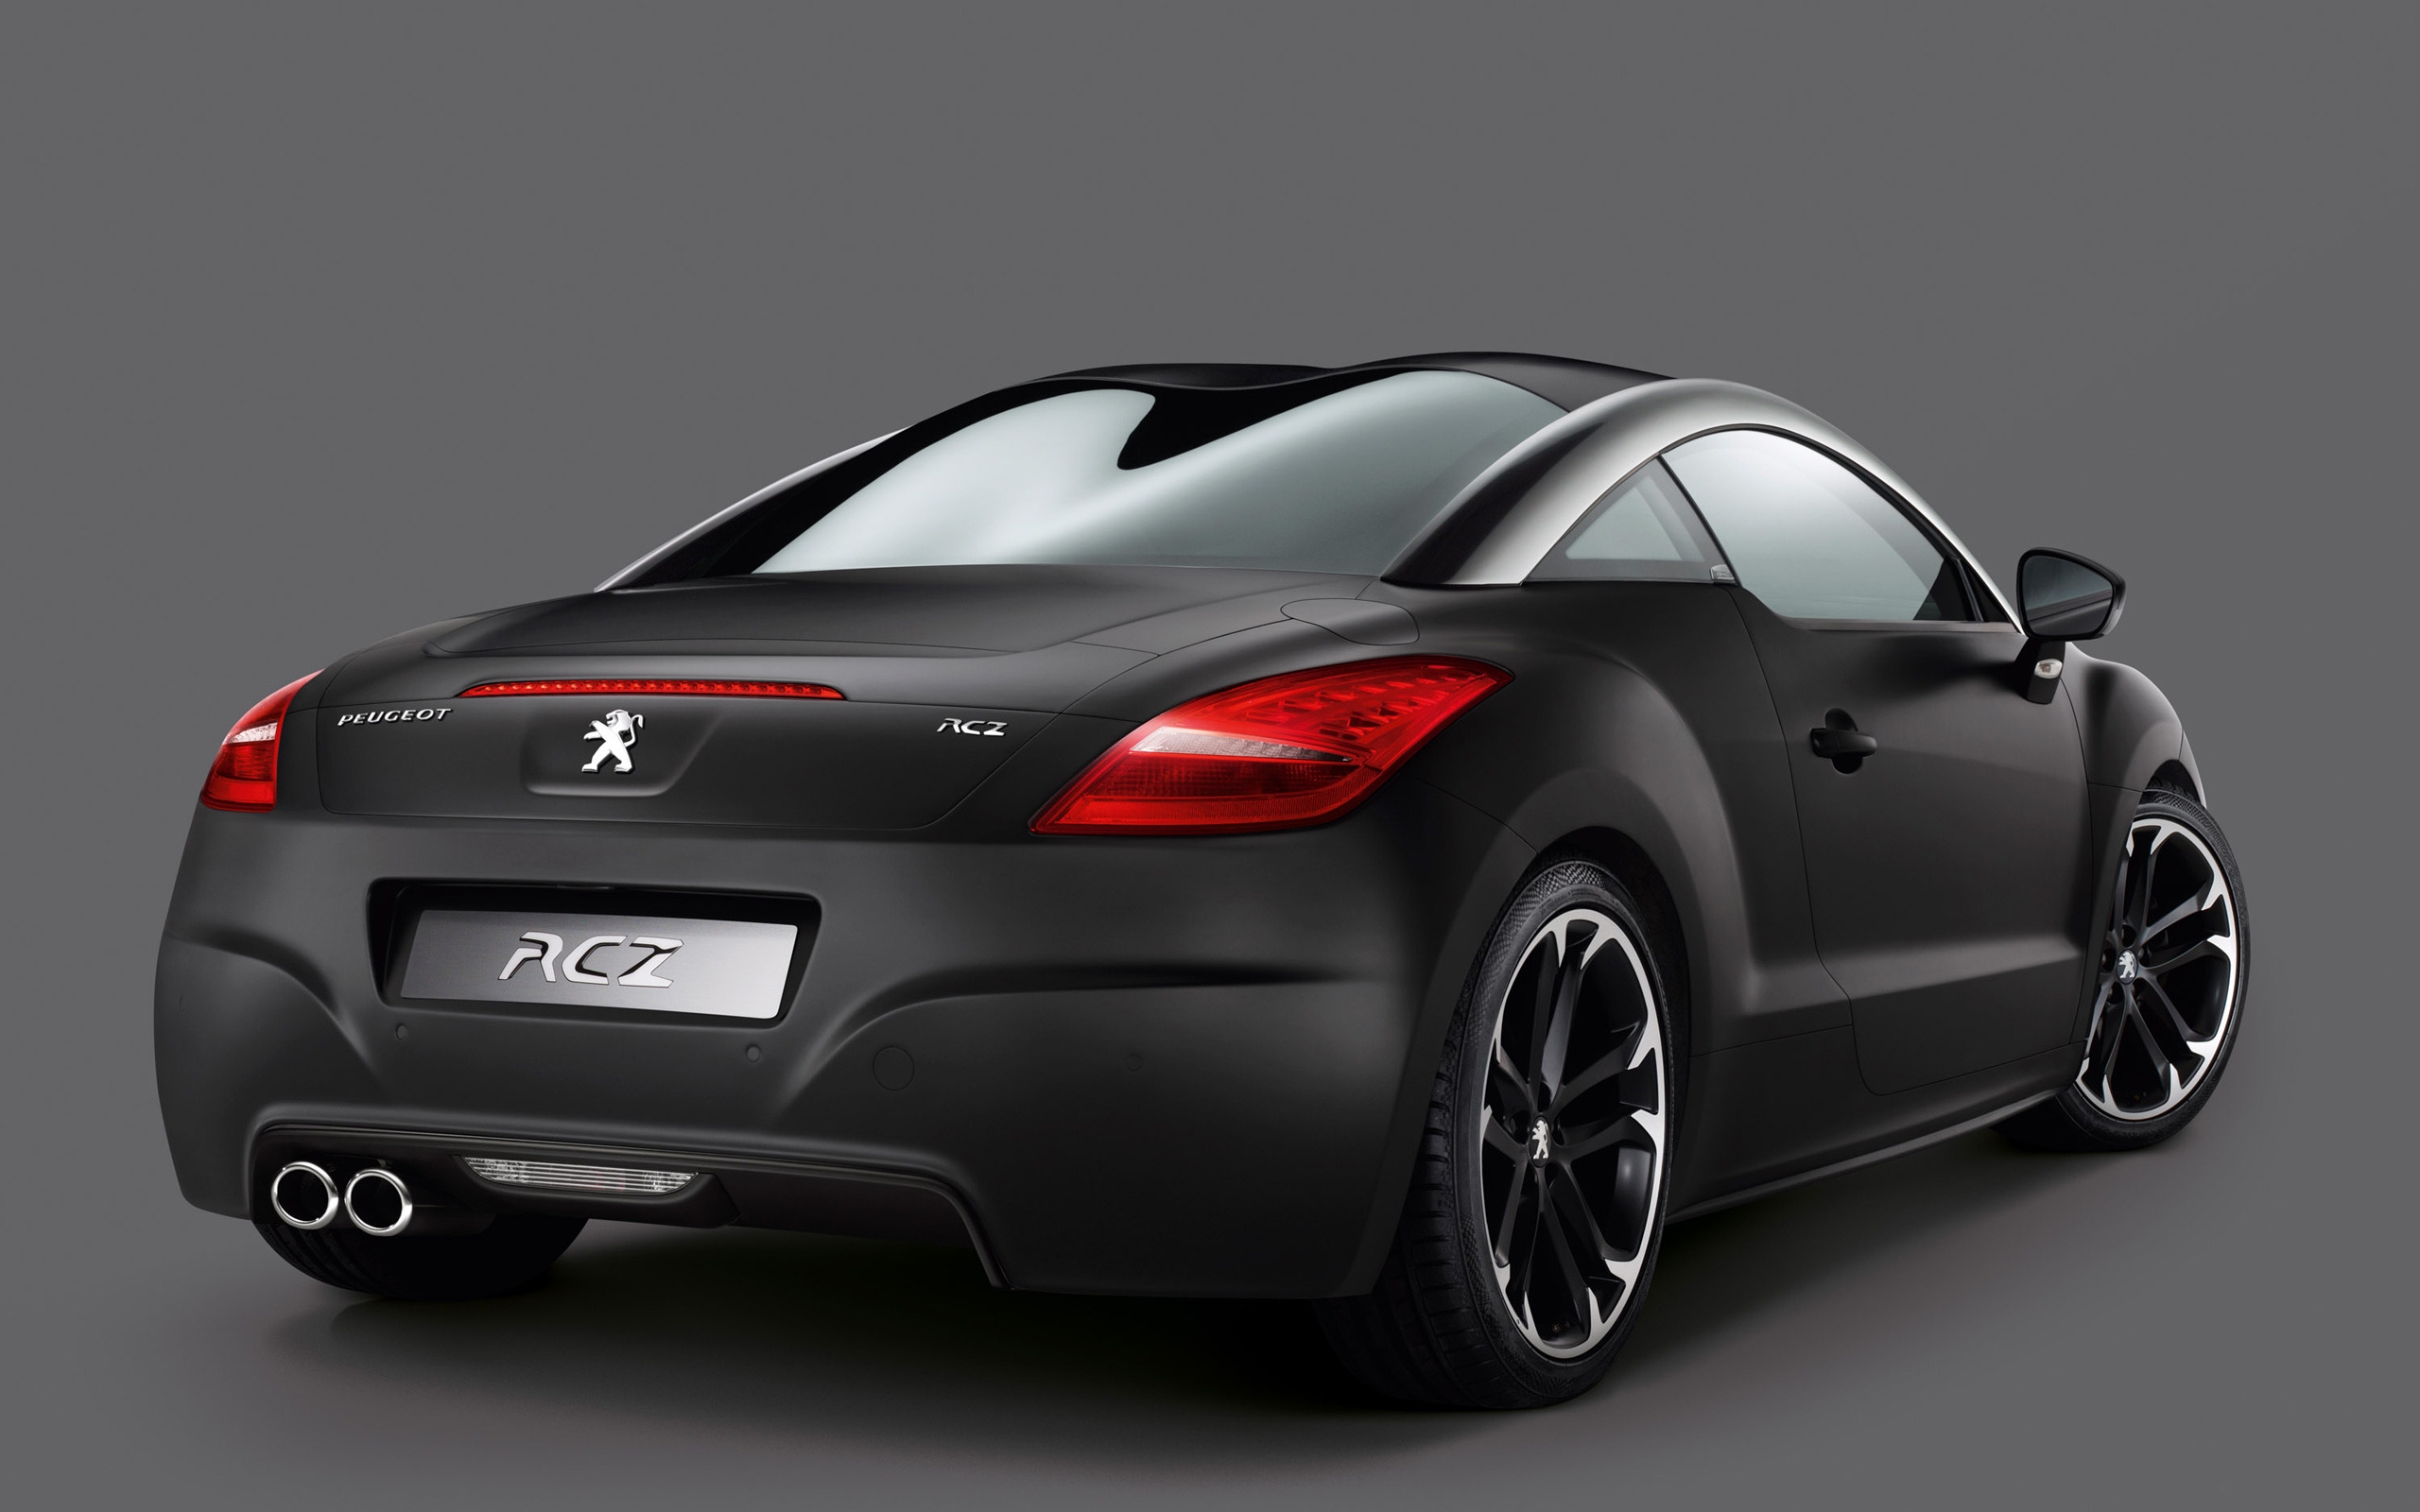 Peugeot RCZ Asphalt Rear for 2560 x 1600 widescreen resolution